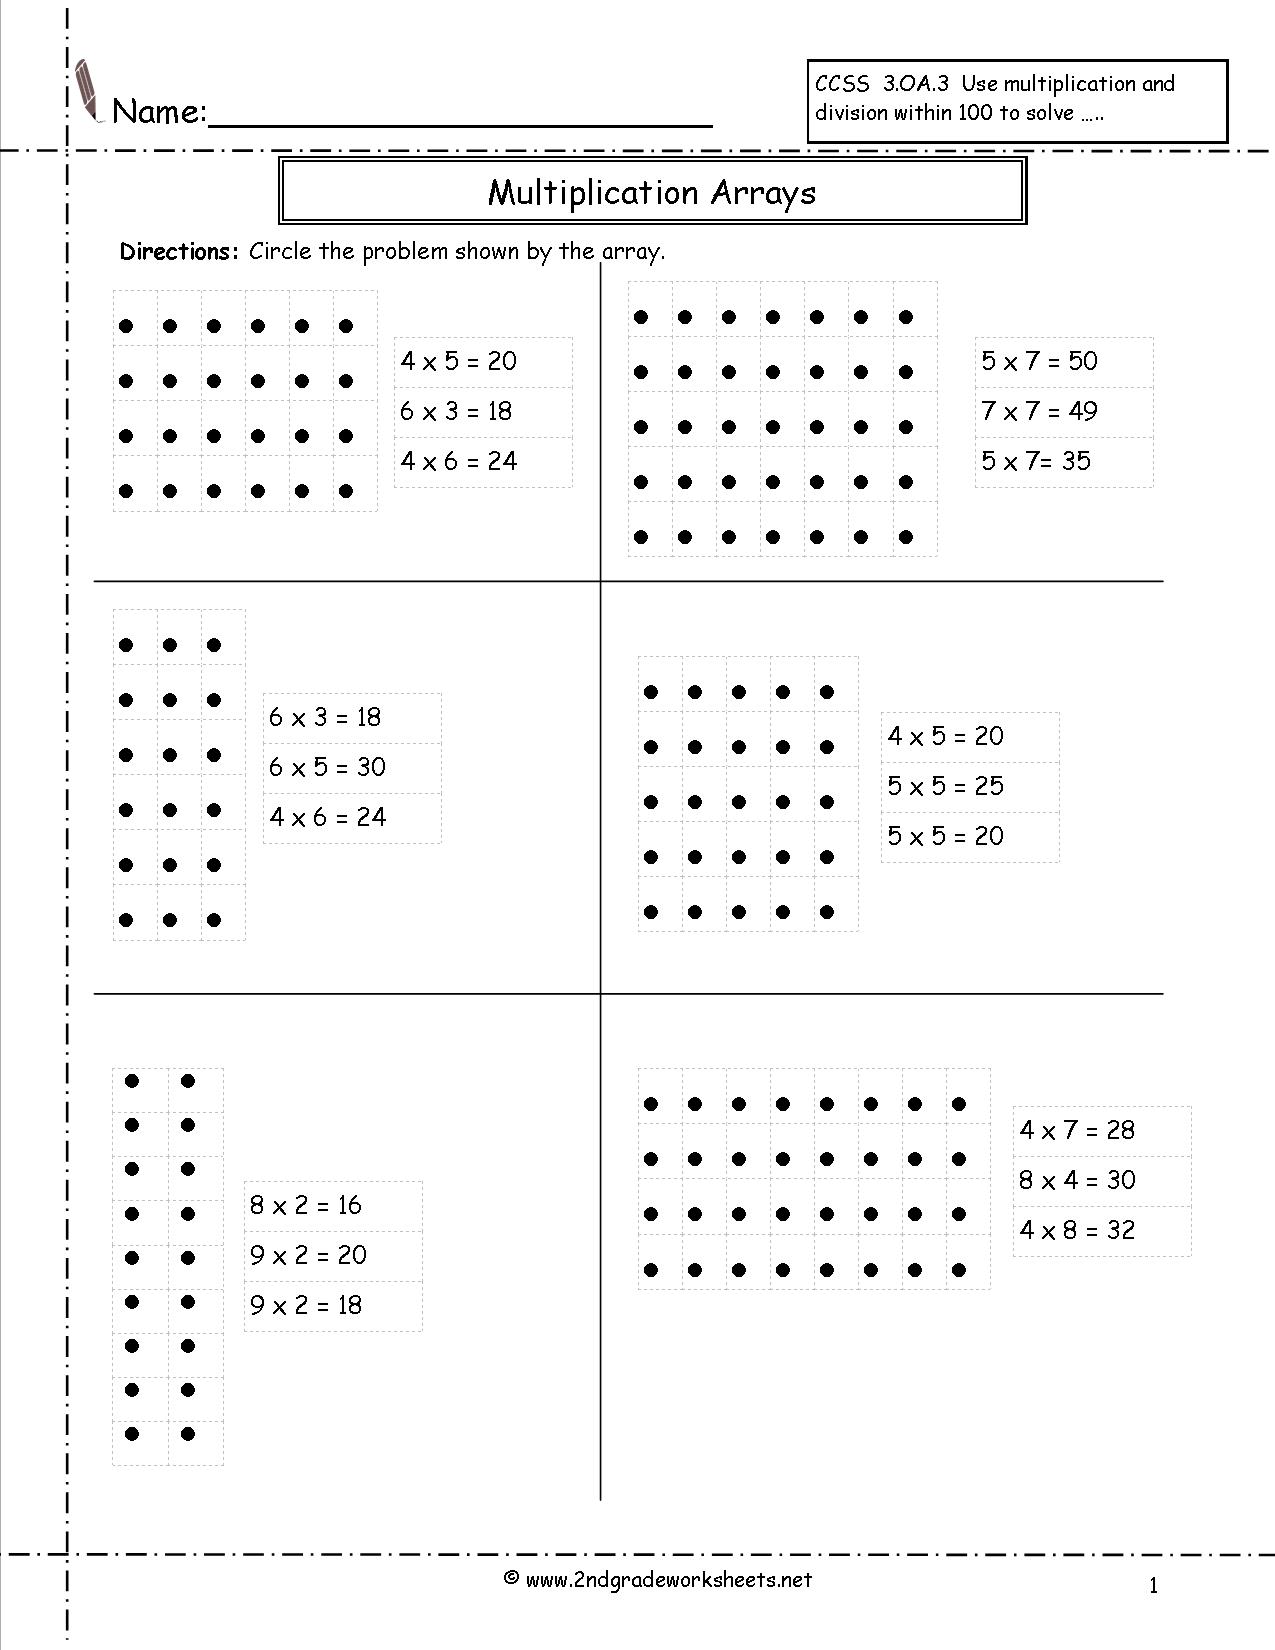 15 Best Images of Division As Arrays Worksheet Array Multiplication